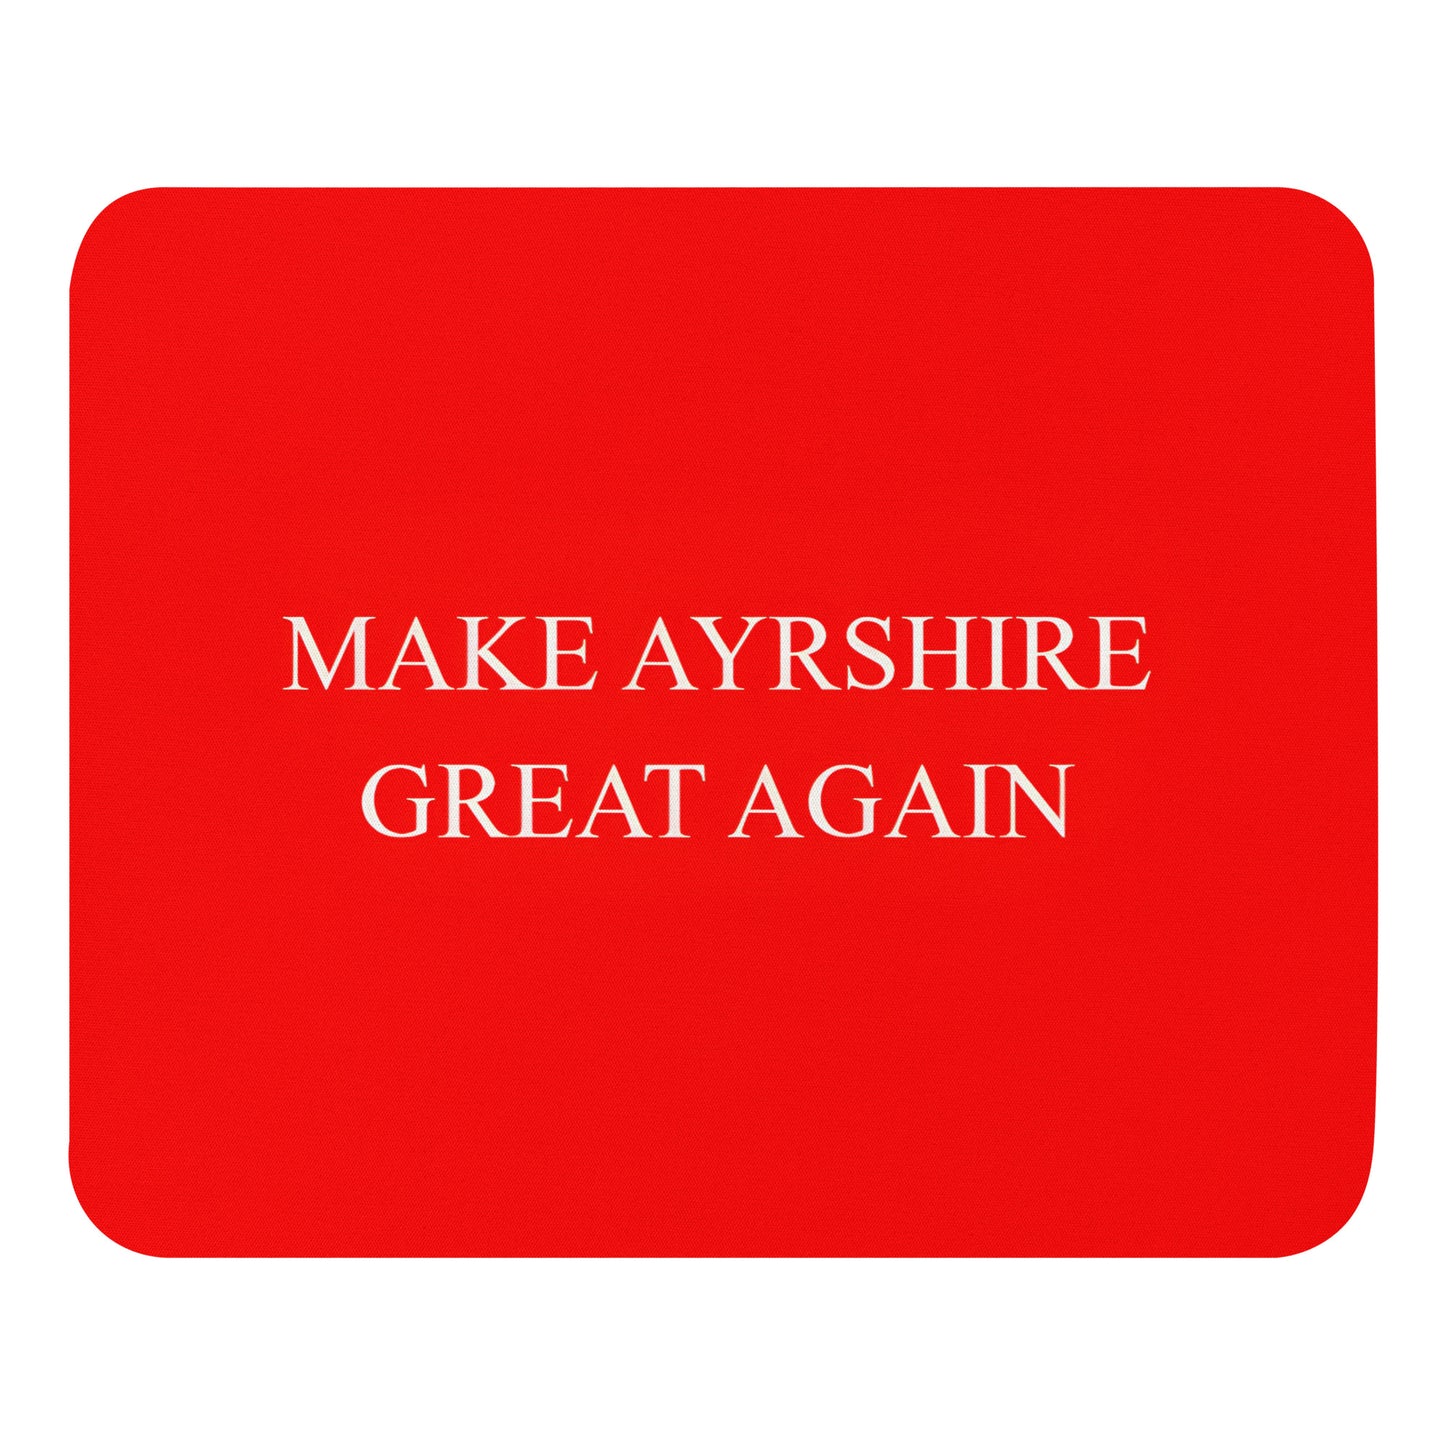 Make Ayrshire Great Again Mouse Pad